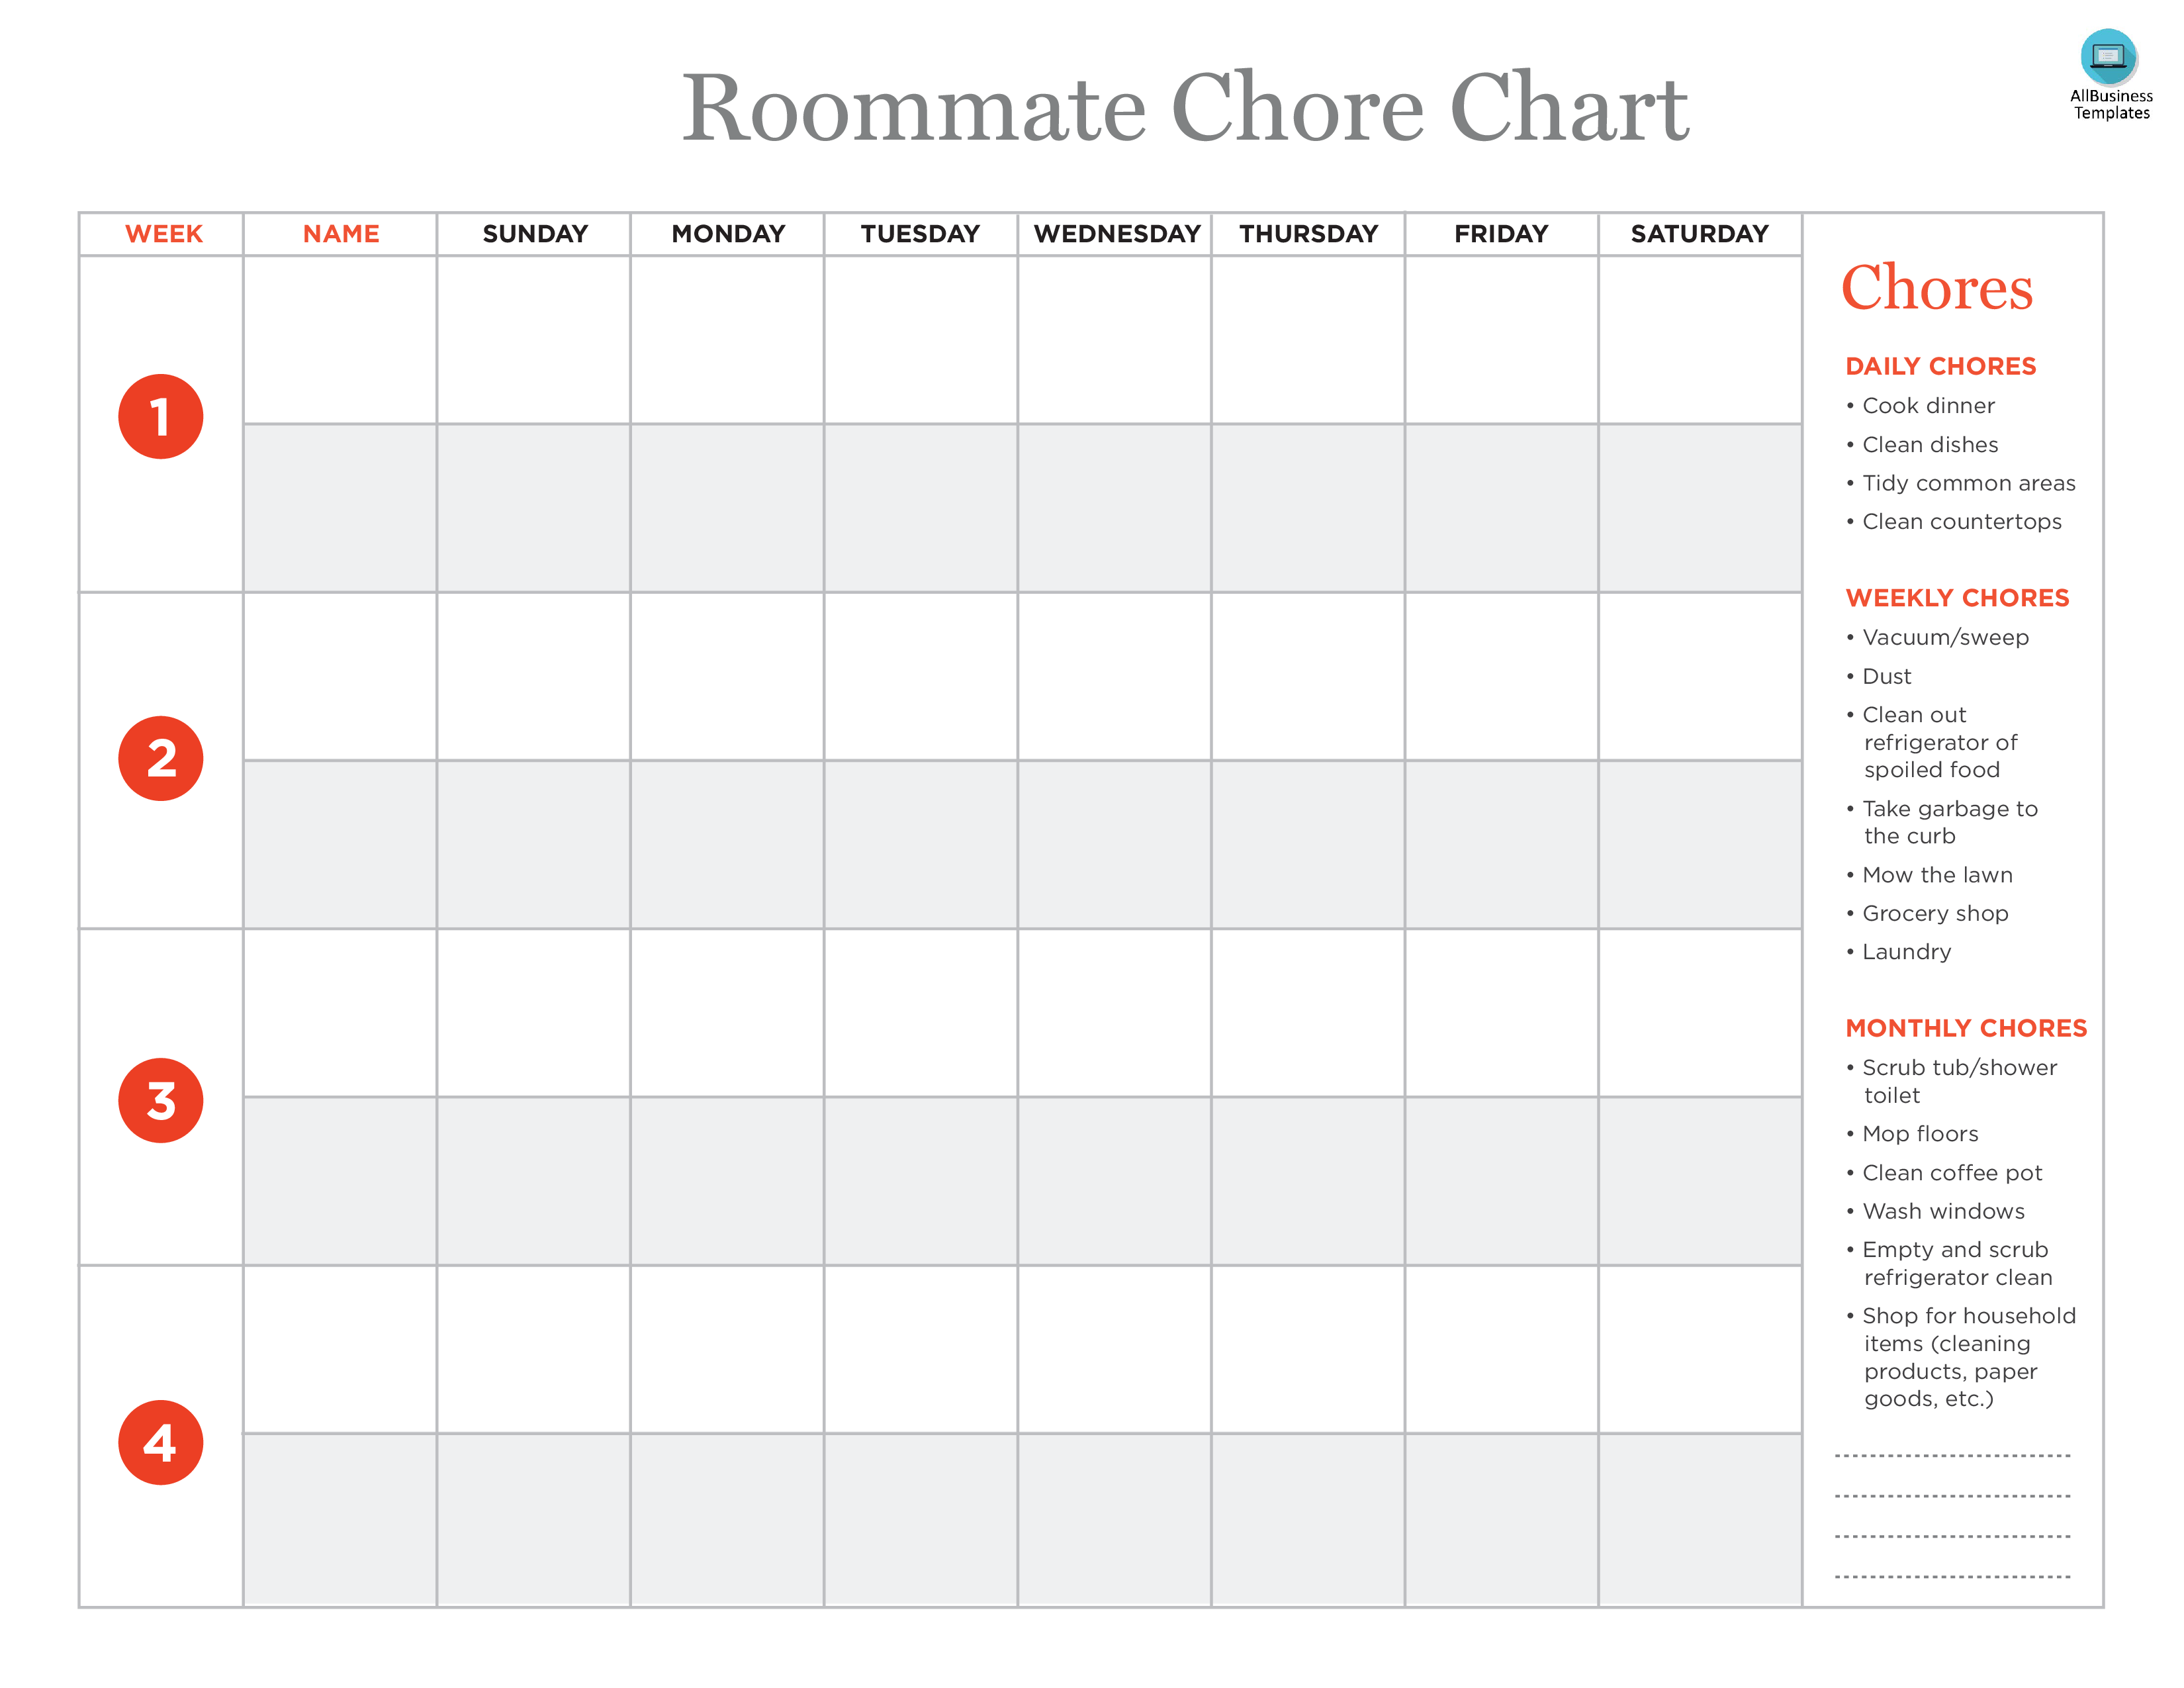 Roommate Chore Chart 模板